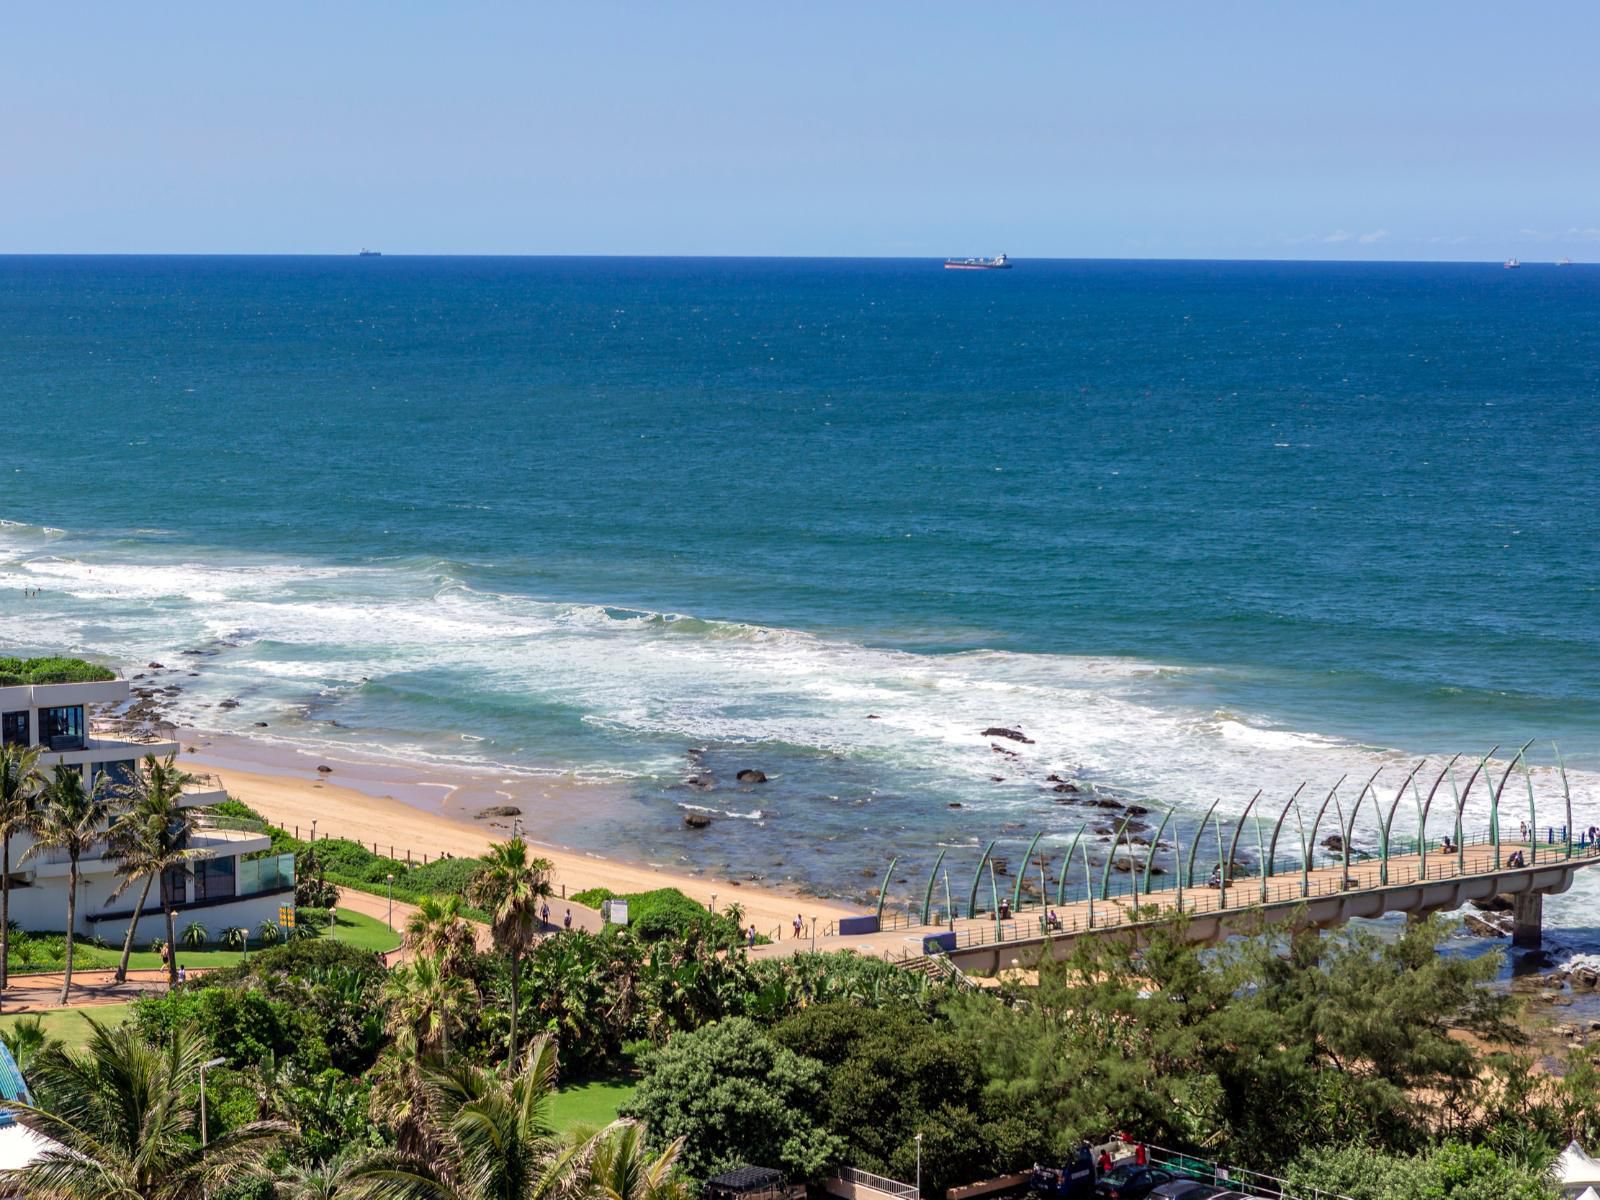 701 Oyster Rock Umhlanga Durban Kwazulu Natal South Africa Beach, Nature, Sand, Palm Tree, Plant, Wood, Ocean, Waters